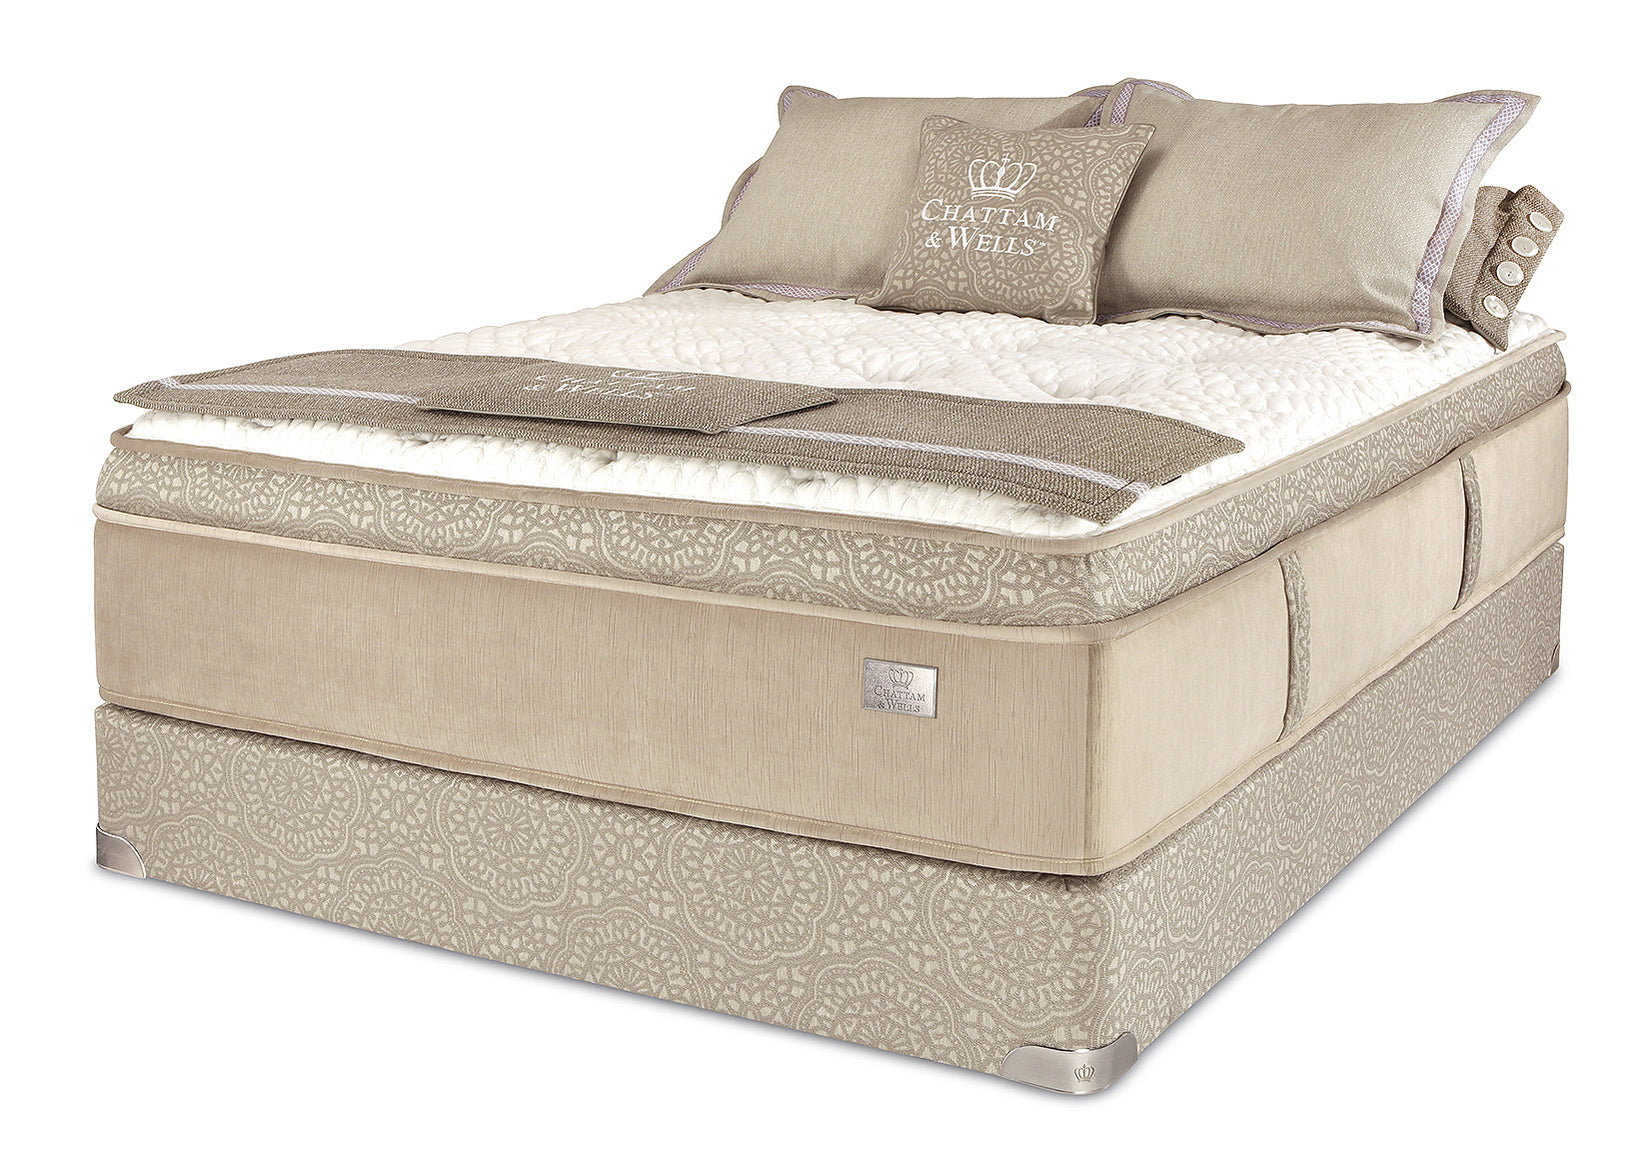 chattam and wells francesca latex luxury plush mattress